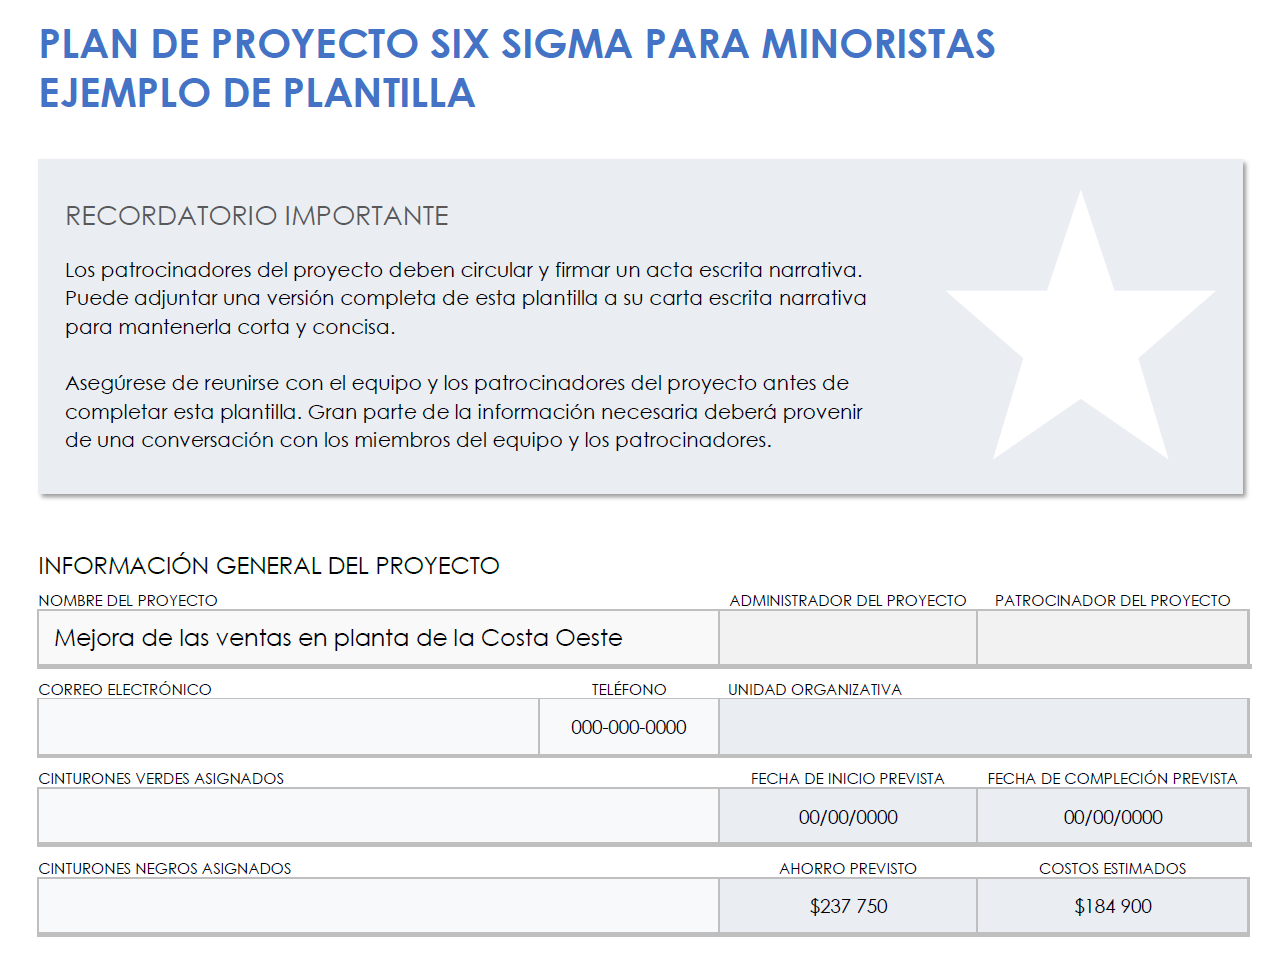 Ejemplo de carta de proyecto minorista Six Sigma